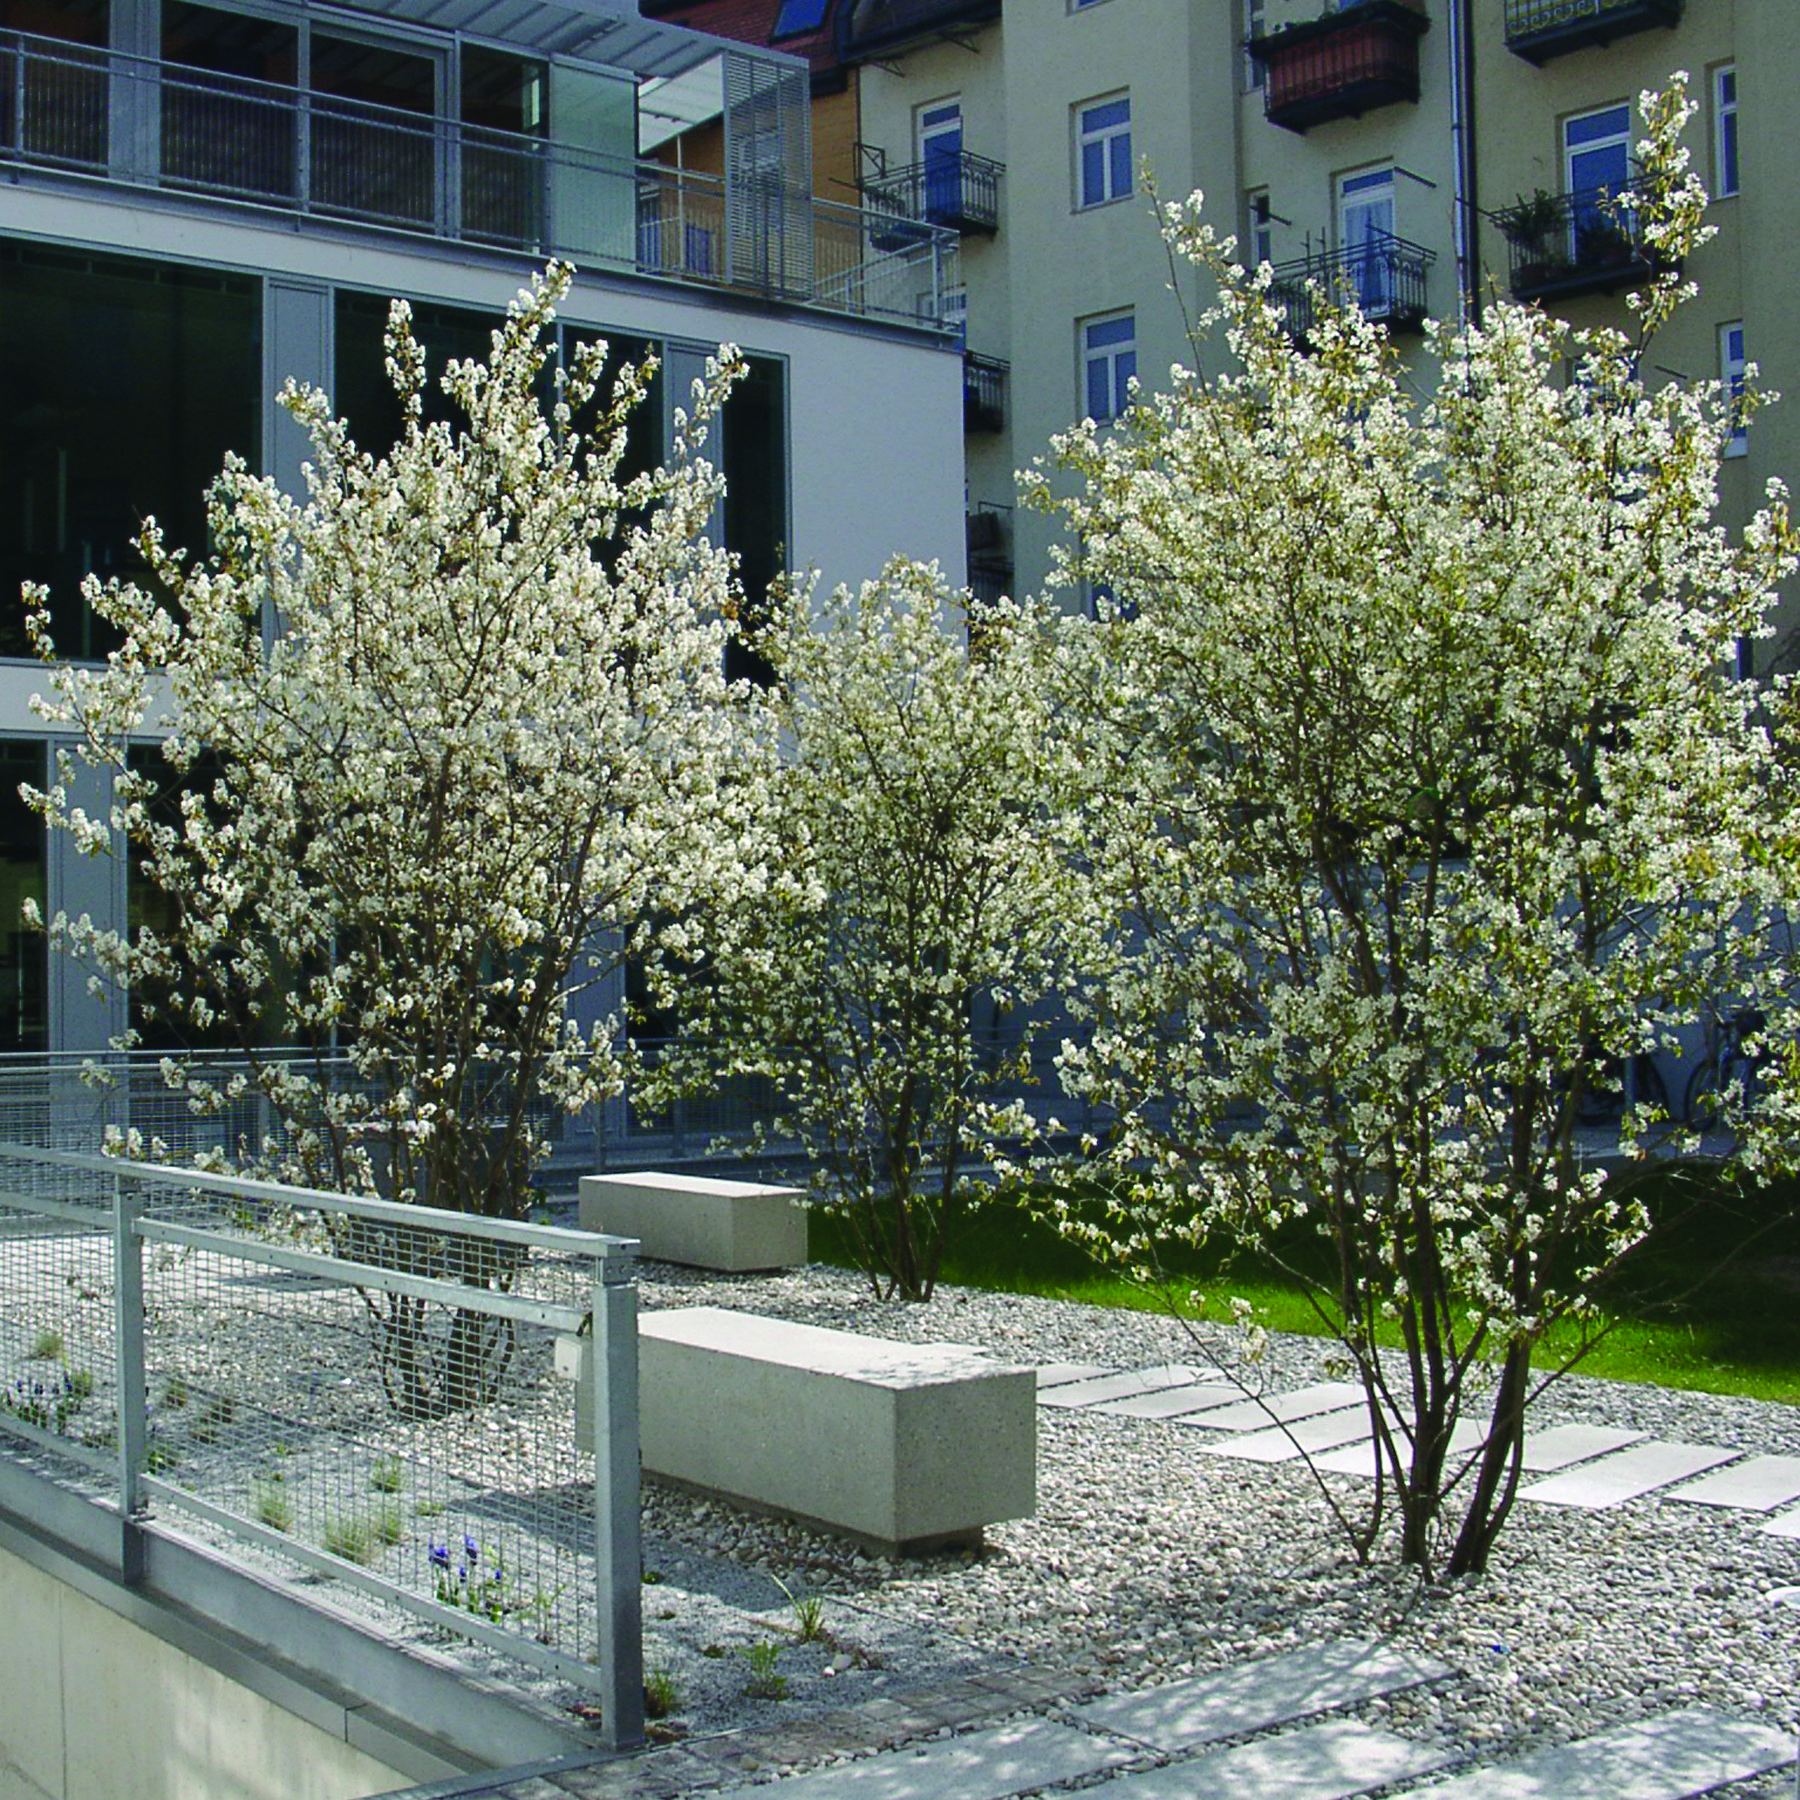 Bild: Frühjahrsblüte der Felsenbirnen im Innenhof, Foto: ver.de landschaftsarchitektur